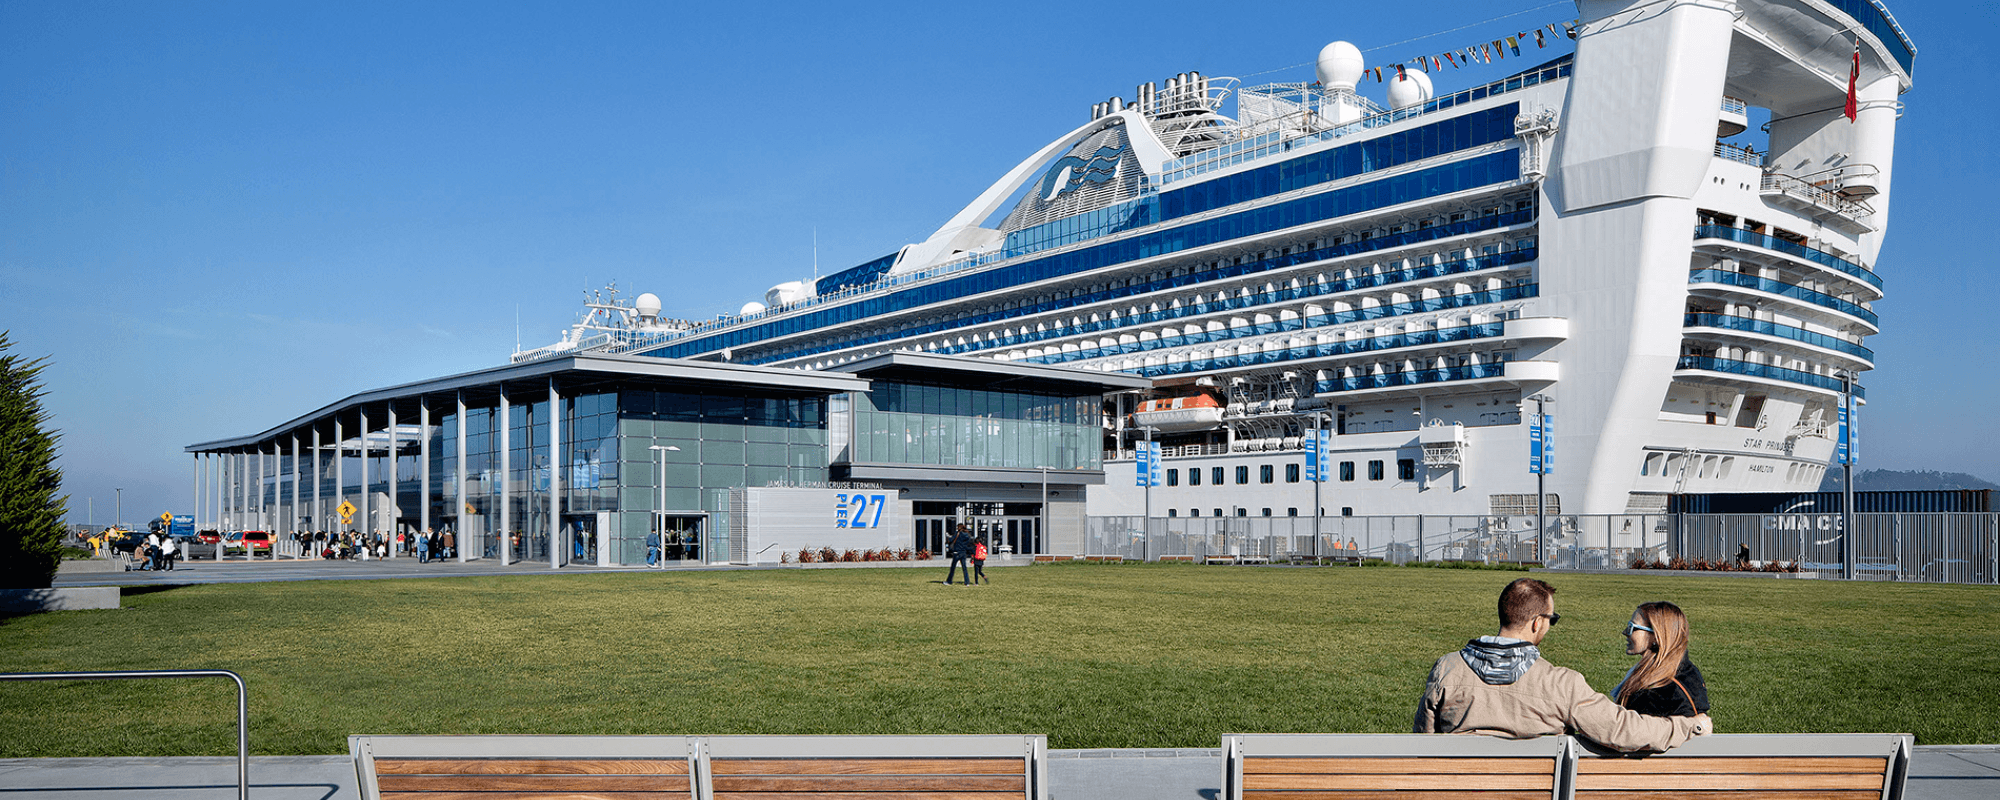 Pier 27 Cruise Terminal